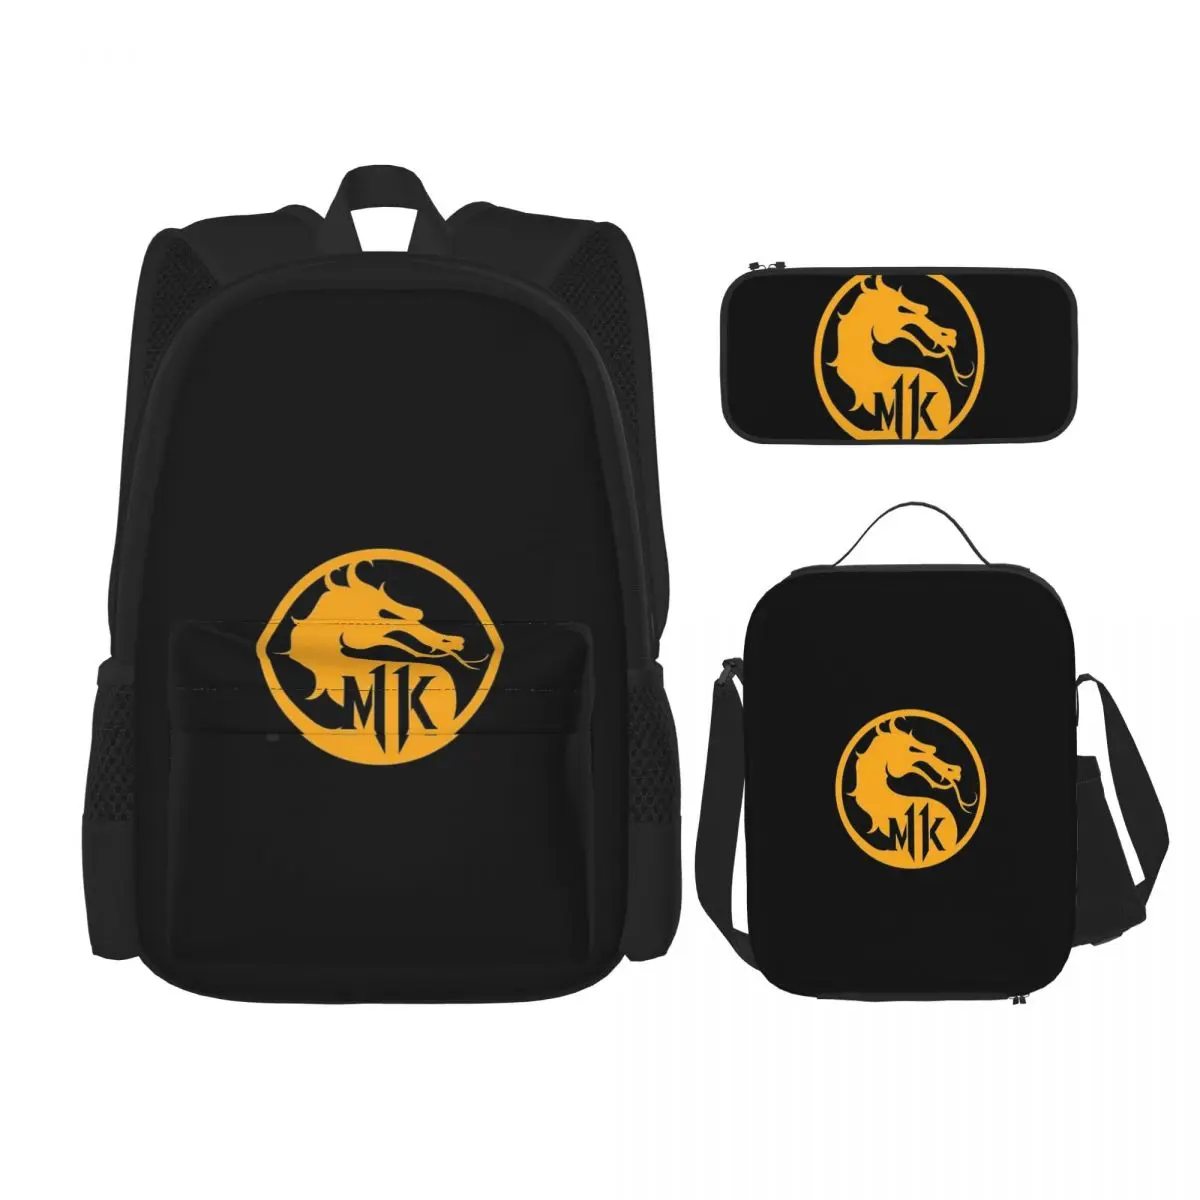 

Mortal Kombat 11 Minimalistic School Bag 3 Pieces SetLunch Bag Combination Large capacity School Nice gift Customizable